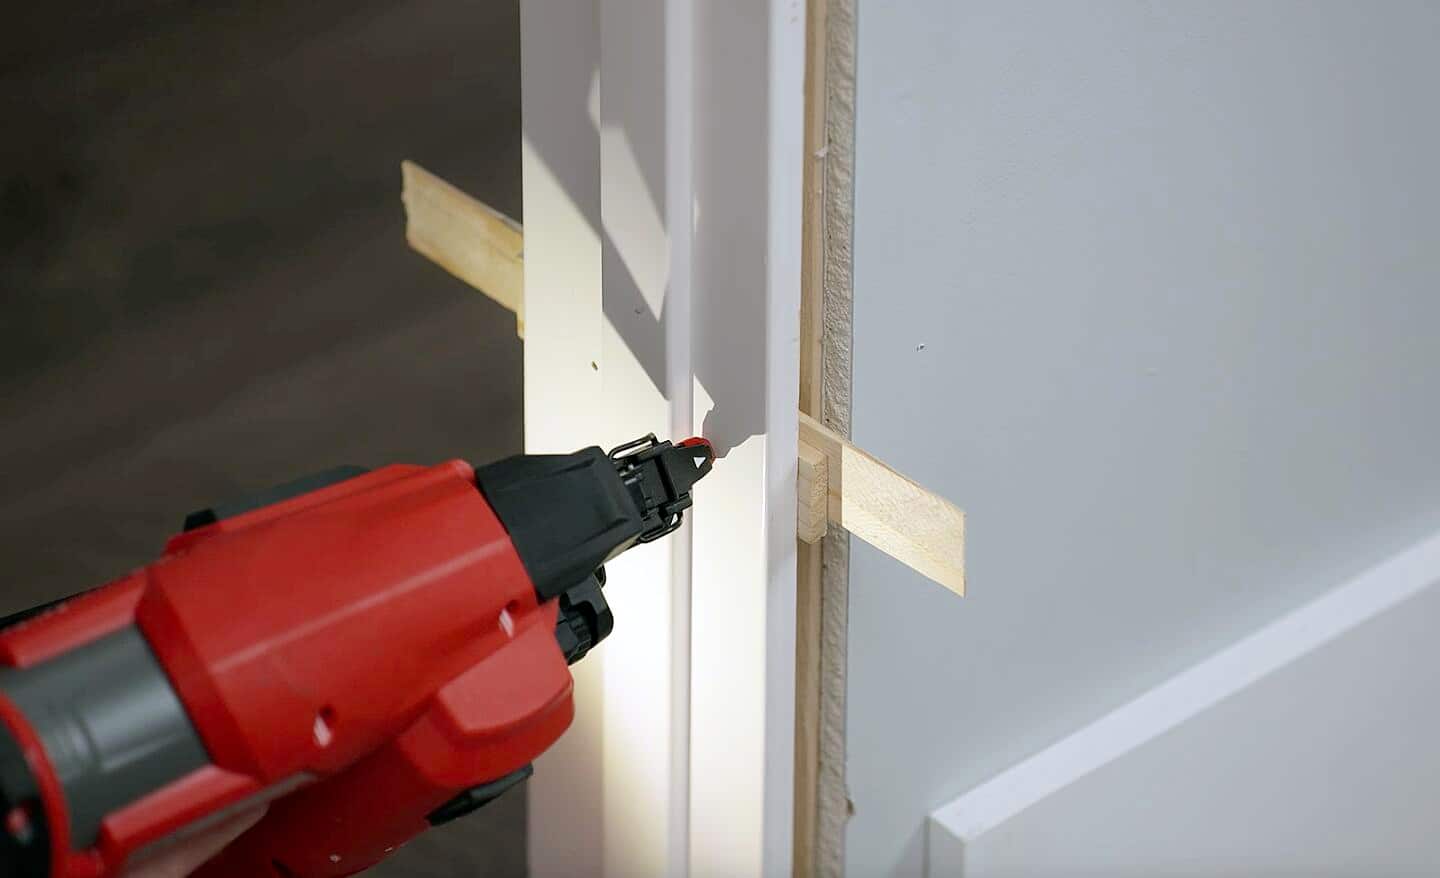 A person using a brad nailer to drive nails through a door frame into the wall.